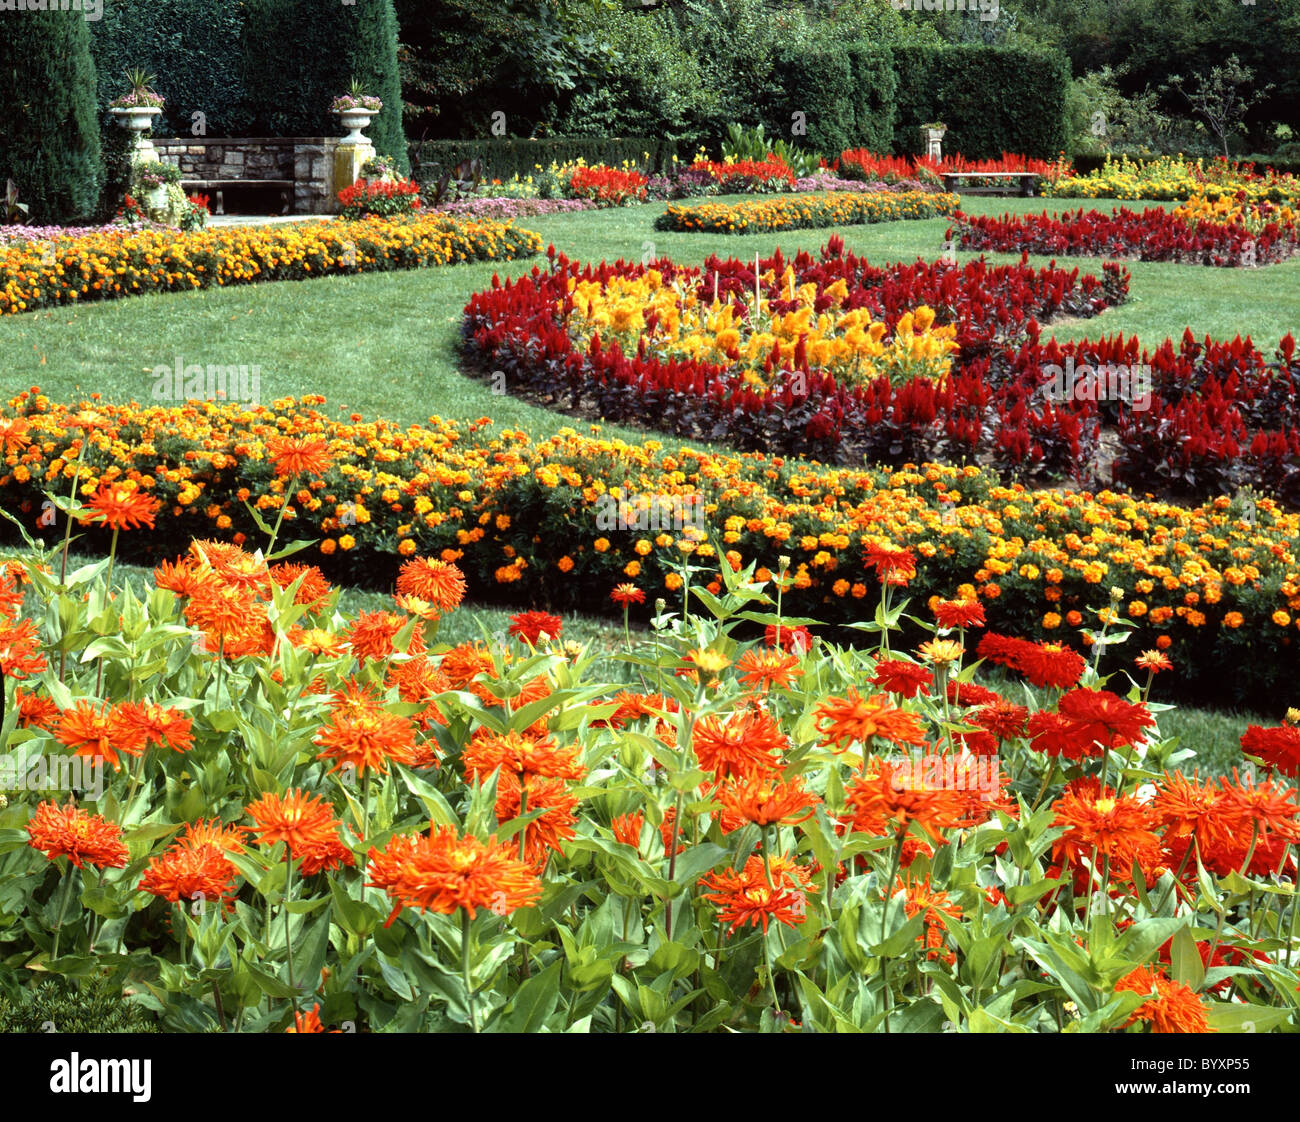 warm colors flower garden, nj stock photo: 34394225 - alamy